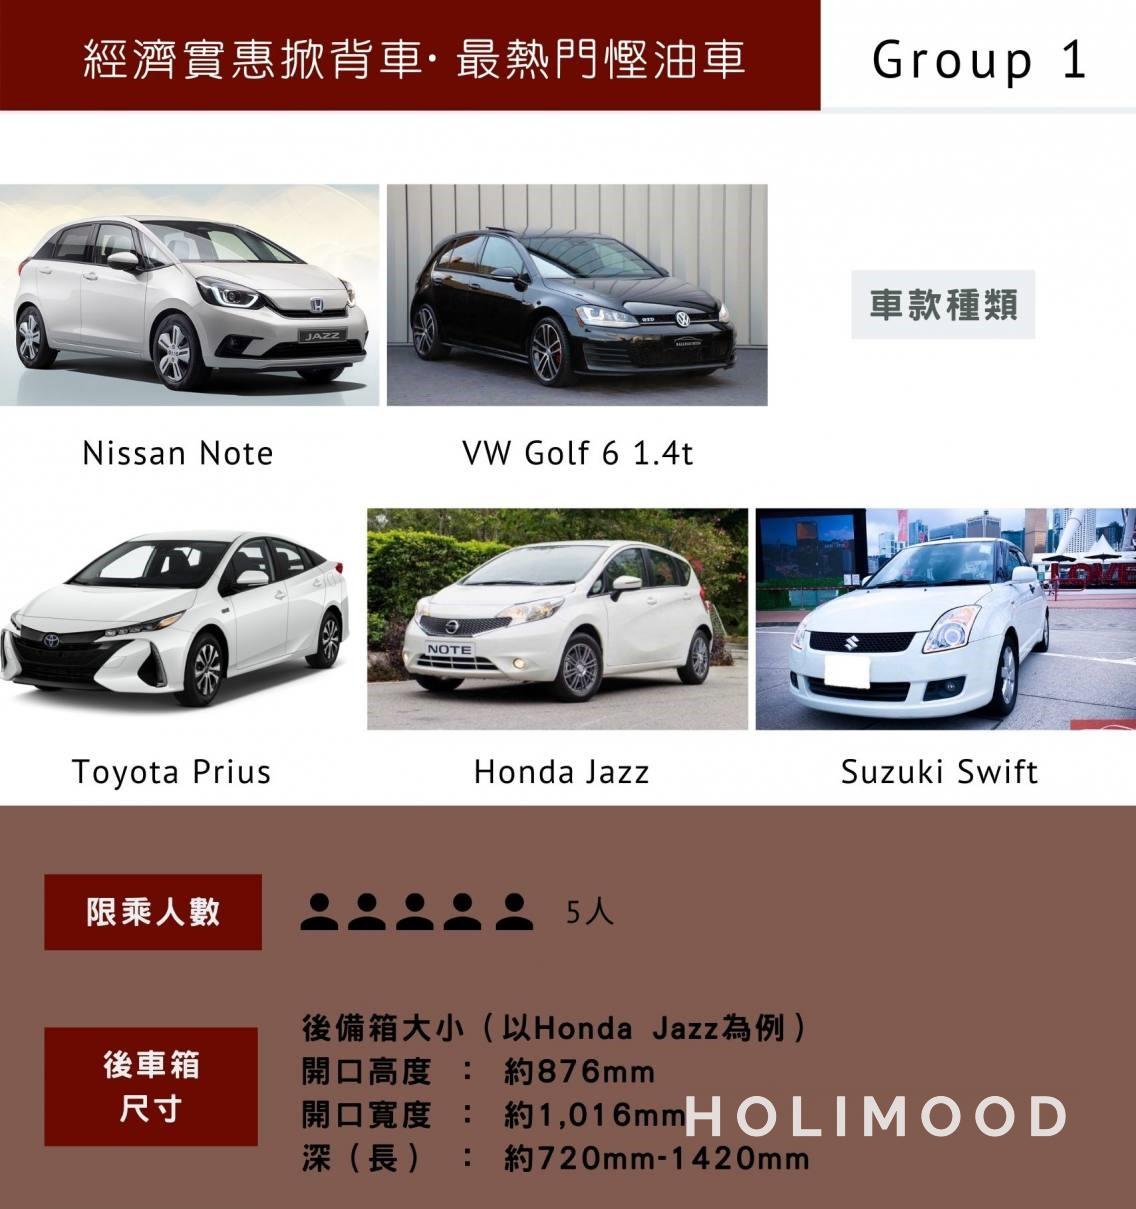 Honda Jazz/ Nissan Note/ Suzuki Swift/ Toyota Prius/ VW Golf 6 - Group 1 Affordable hatchback (Day Rental）